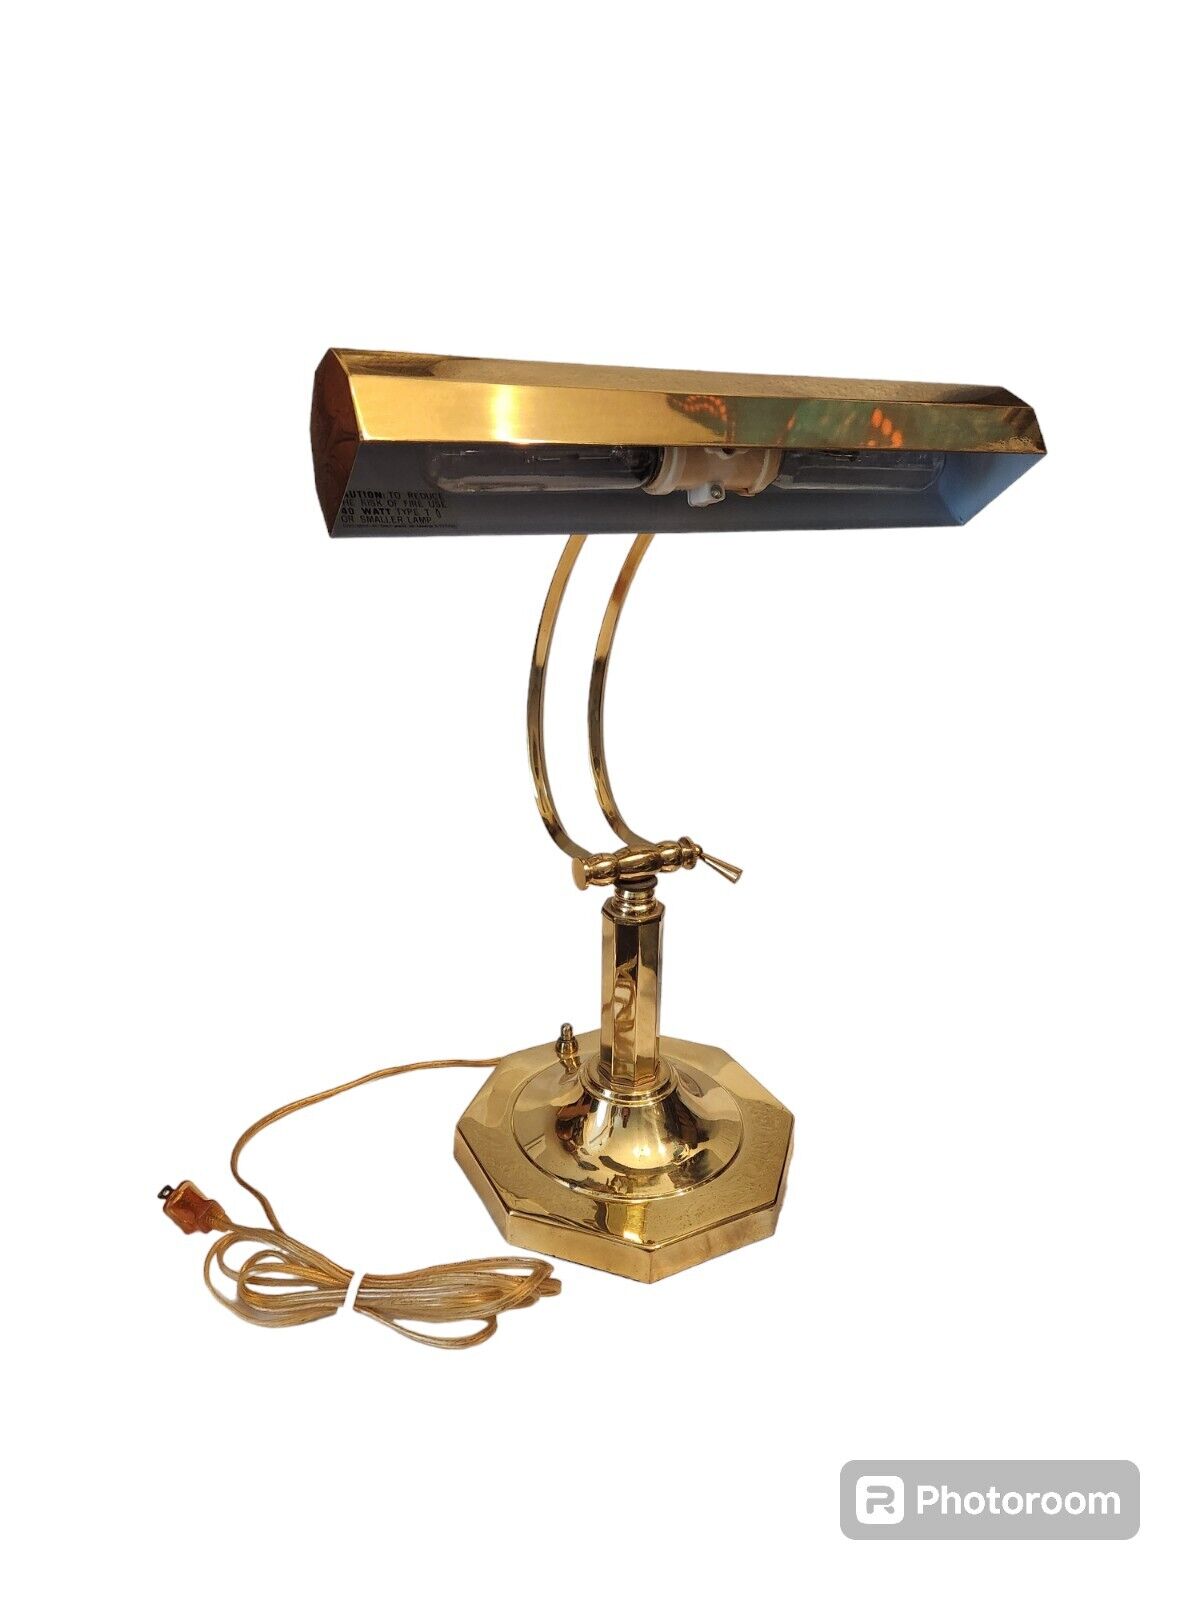 VTG Classic Brass Adjustable Table Desk Lamp. Art Deco And Mid-Century Modern